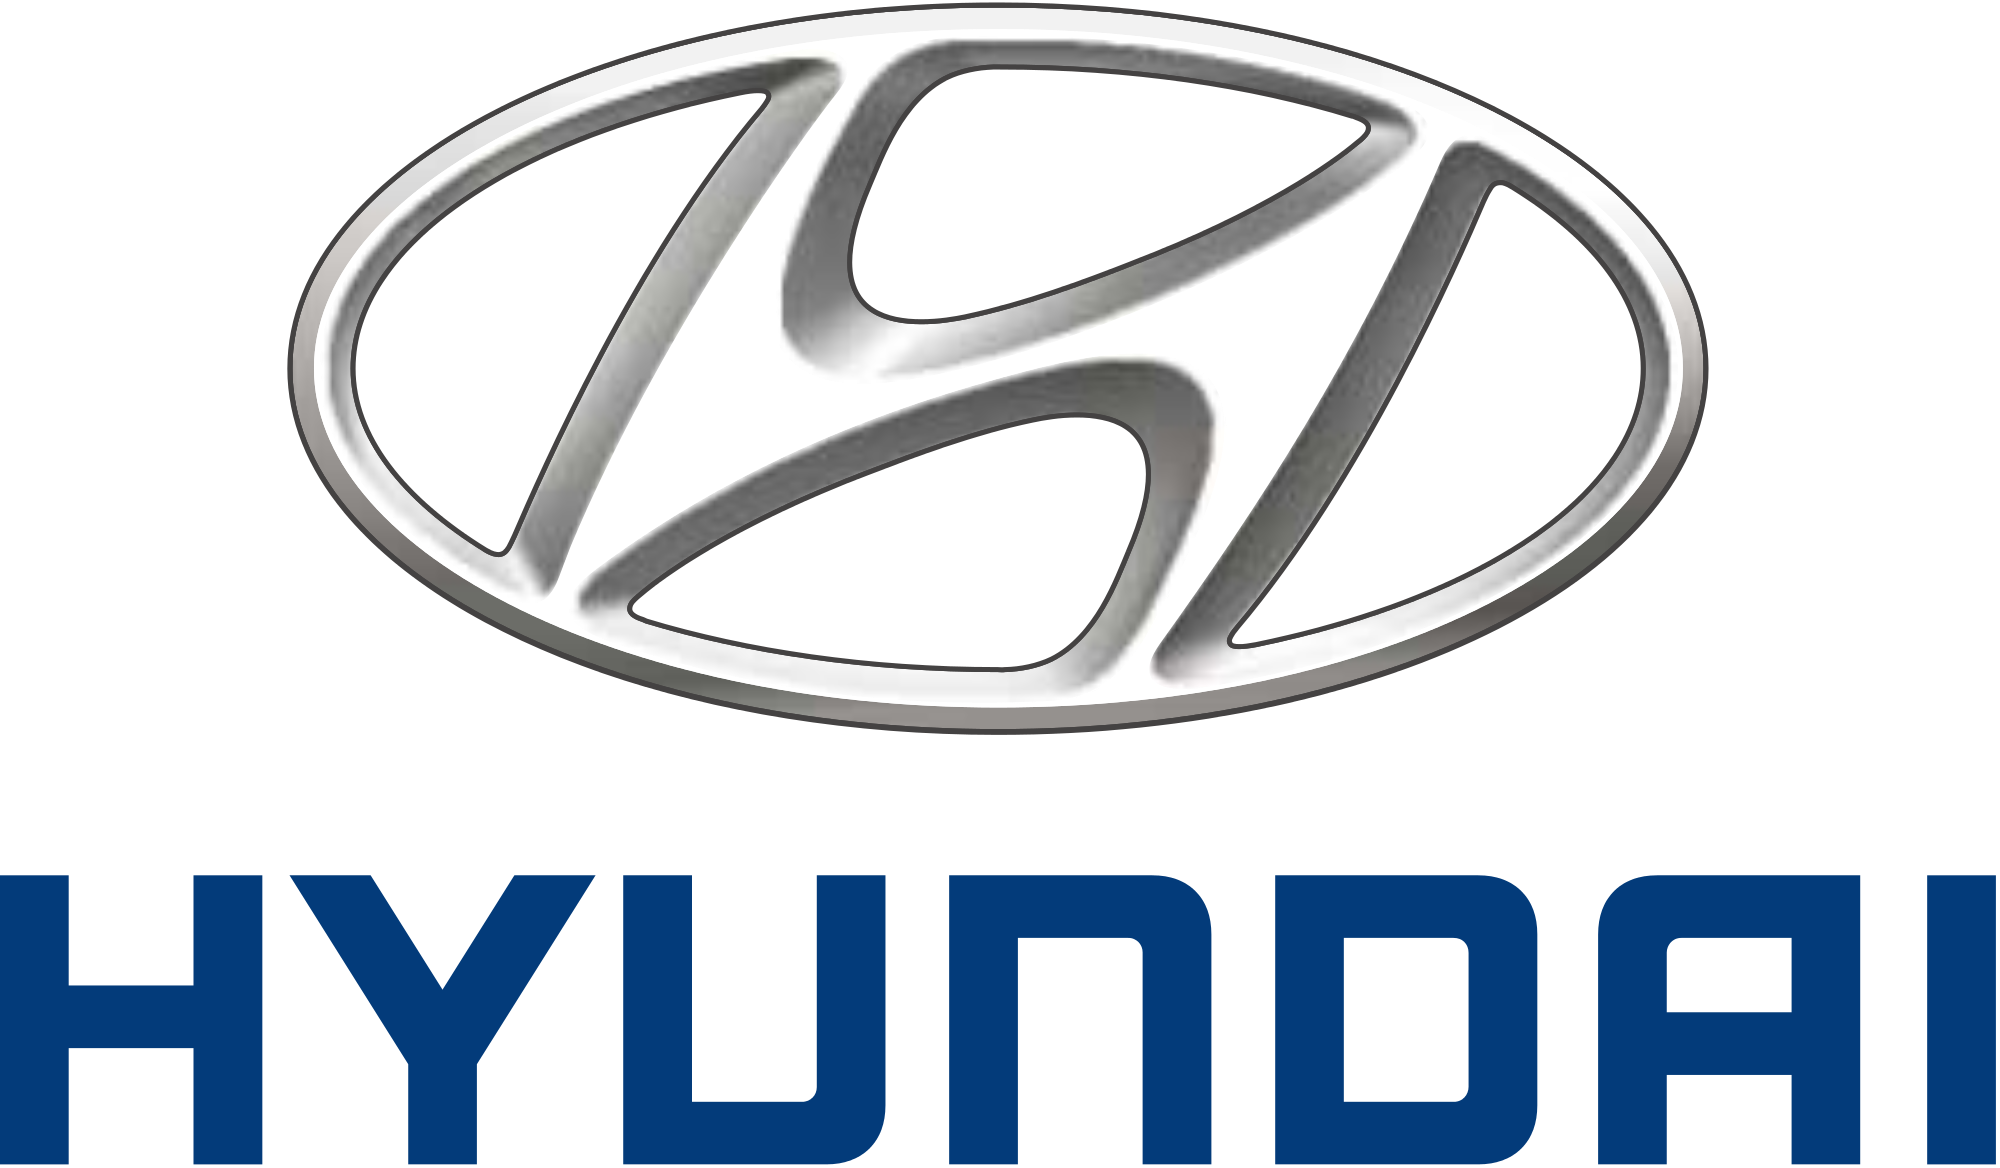 A Hyundai Logopng